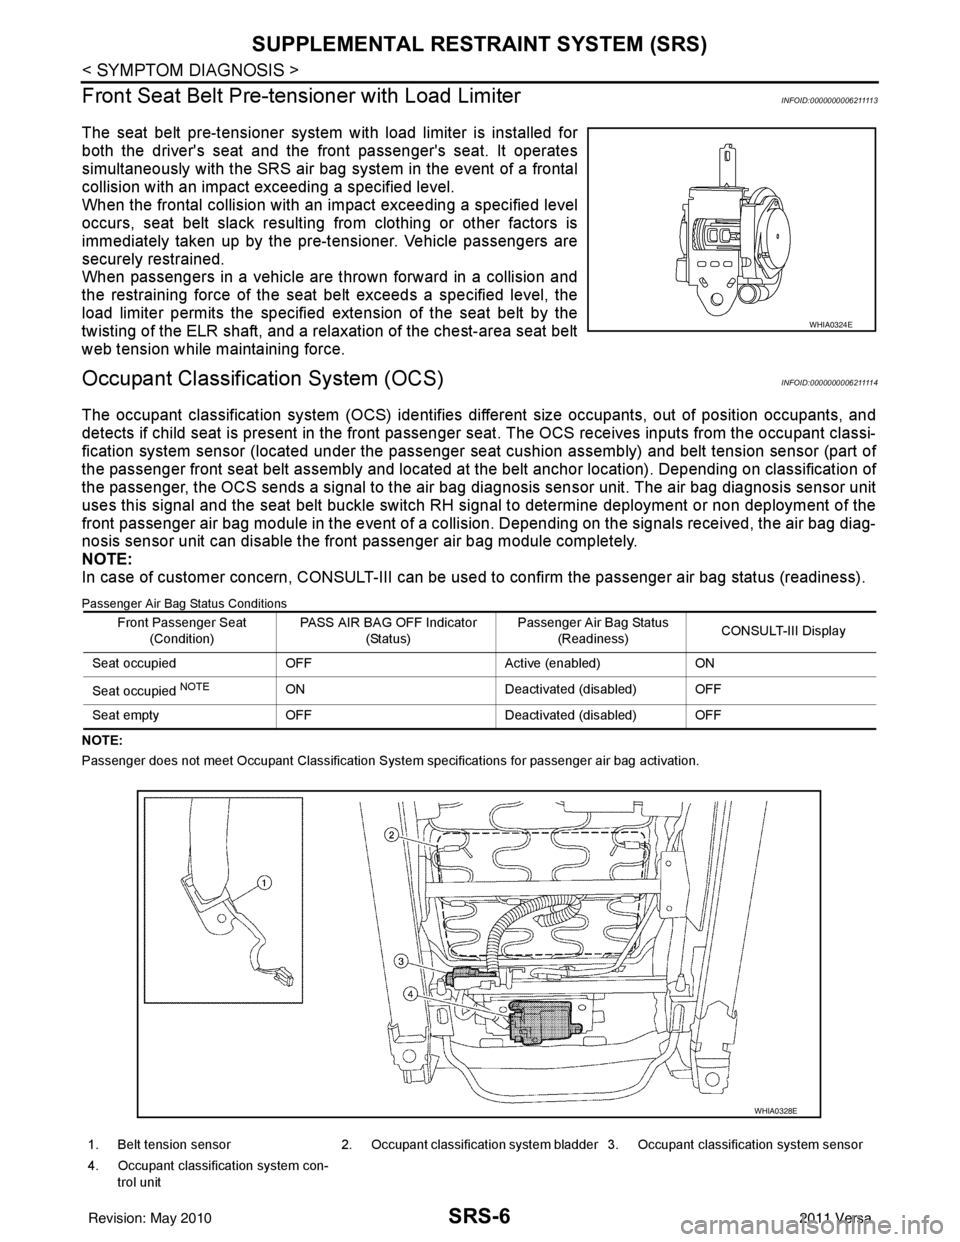 NISSAN TIIDA 2011  Service Repair Manual SRS-6
< SYMPTOM DIAGNOSIS >
SUPPLEMENTAL RESTRAINT SYSTEM (SRS)
Front Seat Belt Pre-te nsioner with Load Limiter
INFOID:0000000006211113
The seat belt pre-tensioner system wi th load limiter is instal